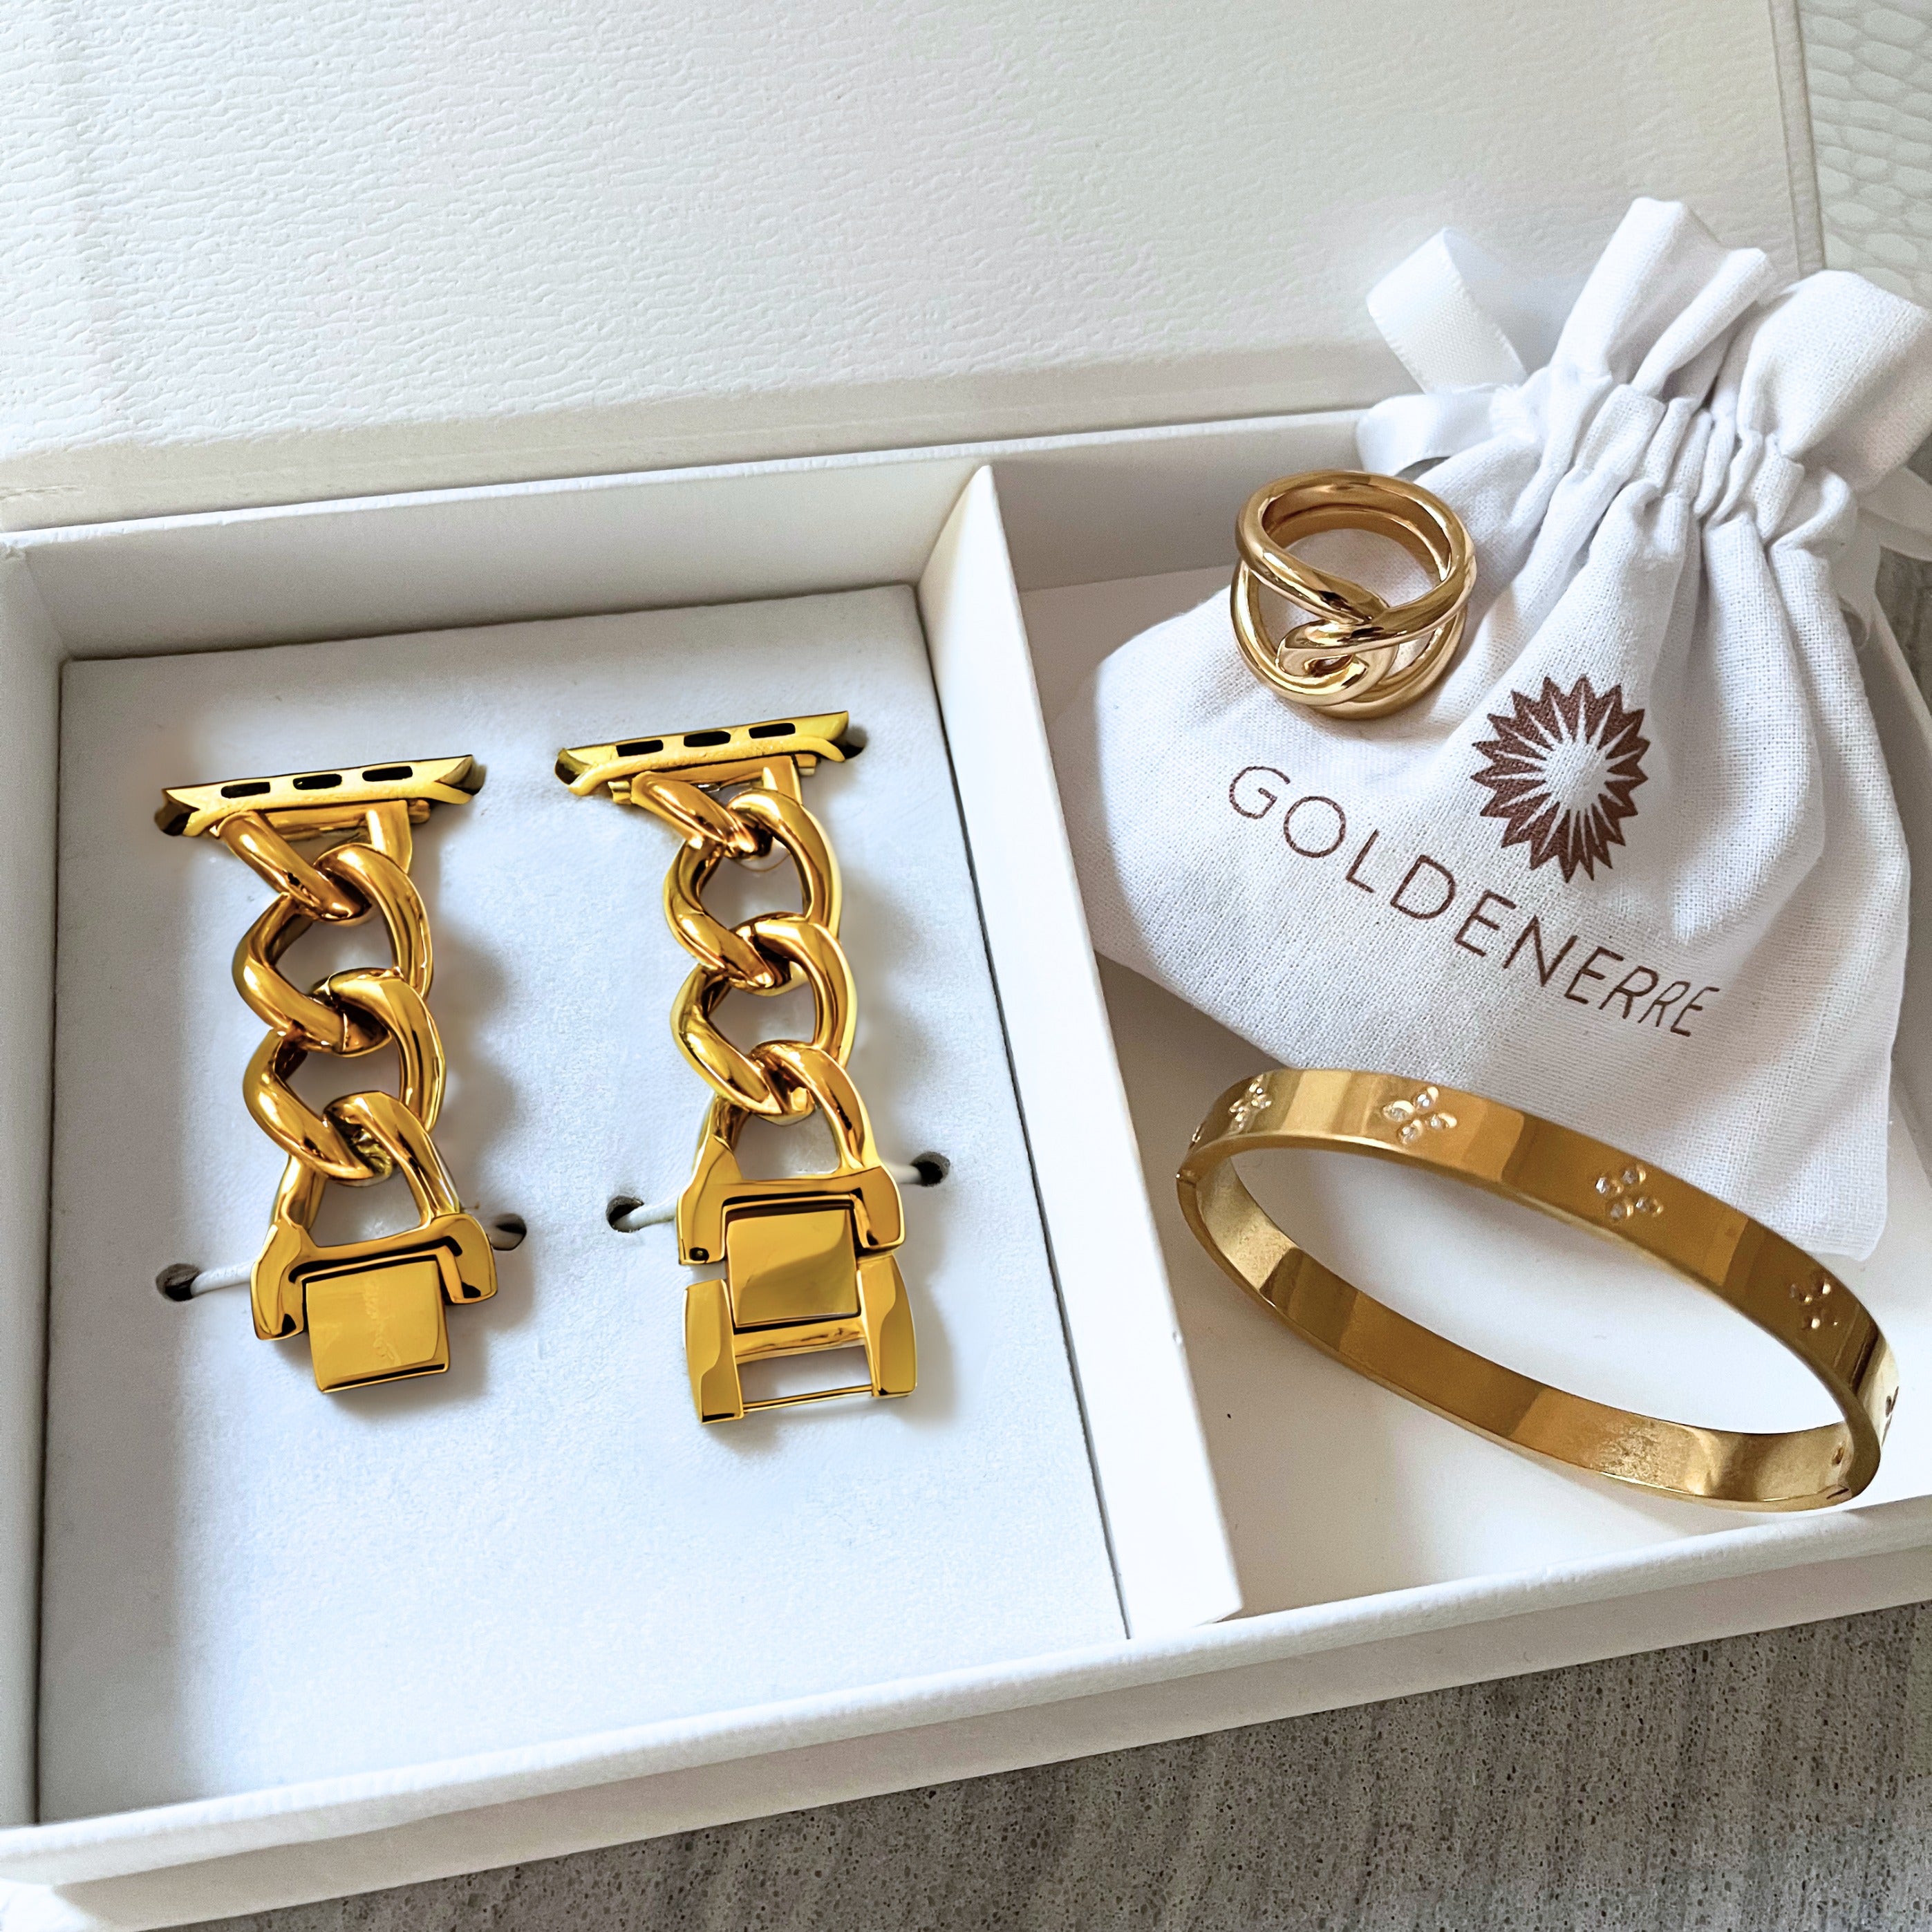 Modern Shine Basketweave Gift Set - Goldenerre Women's Apple Watch Bands and Jewelry